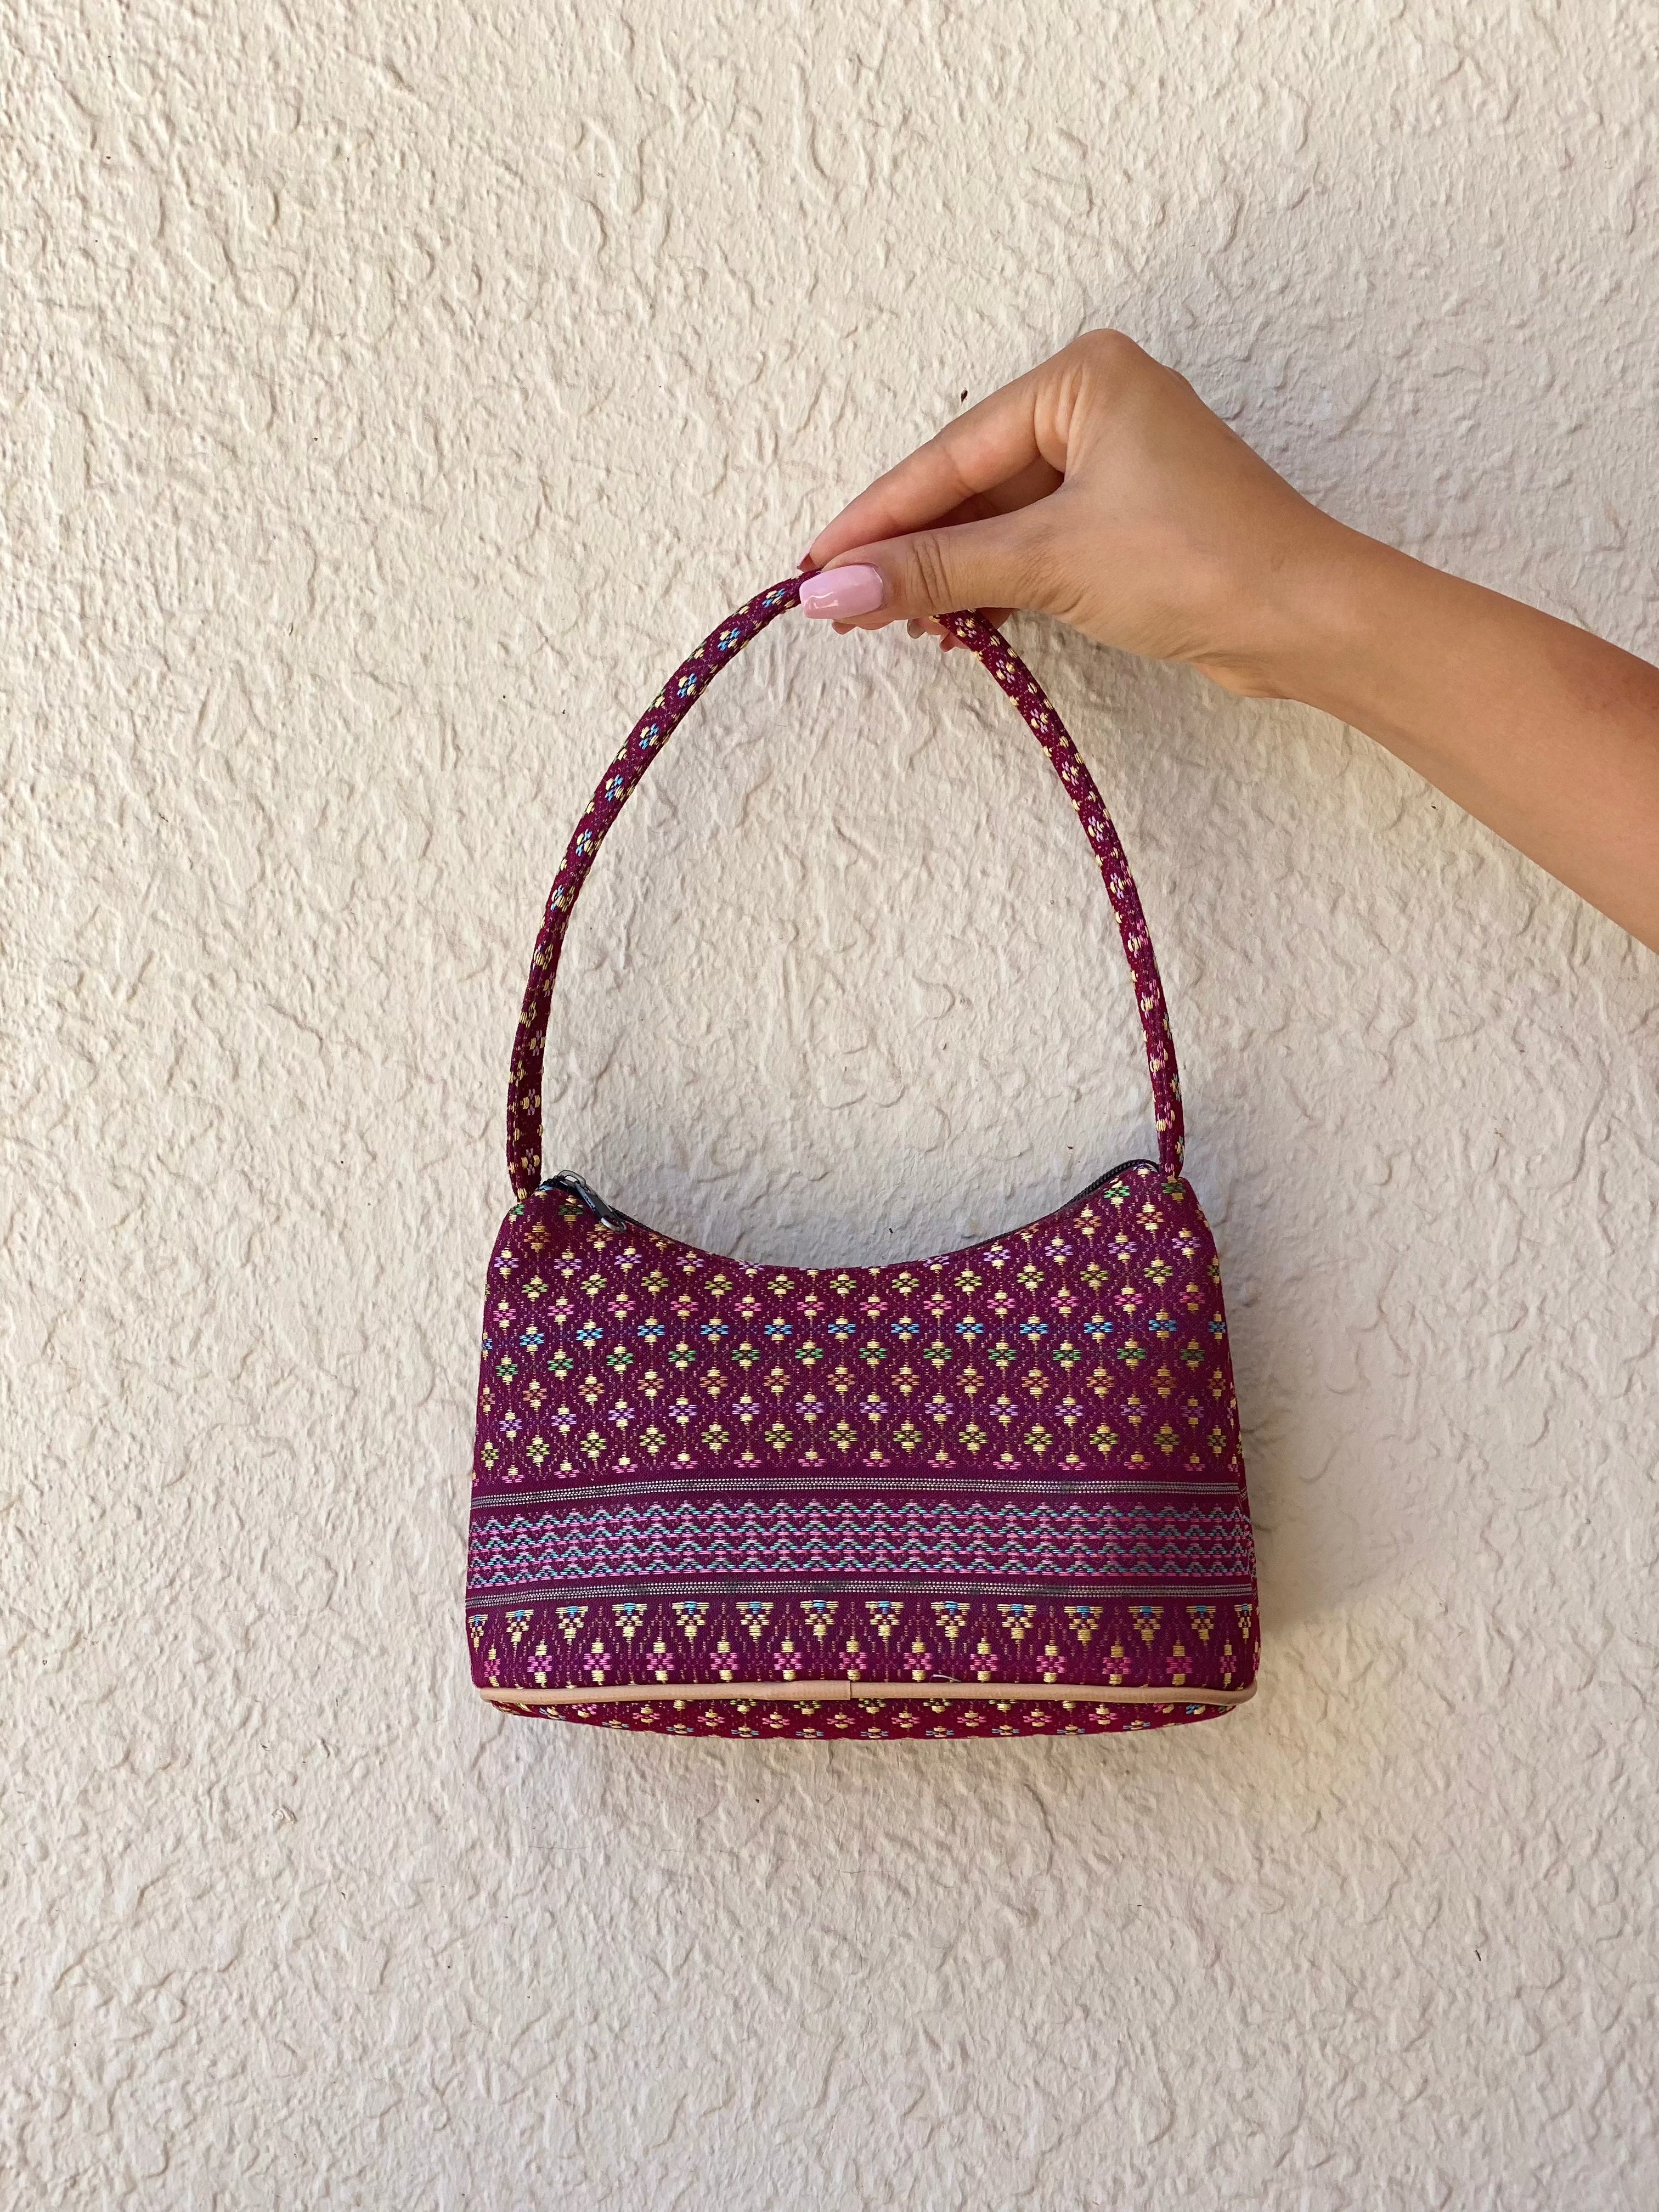 Mini Boho Handbag - Balagan Vintage Handbags bag, beaded bag, embellished bag, handbag, shoulder bag, vintage bags